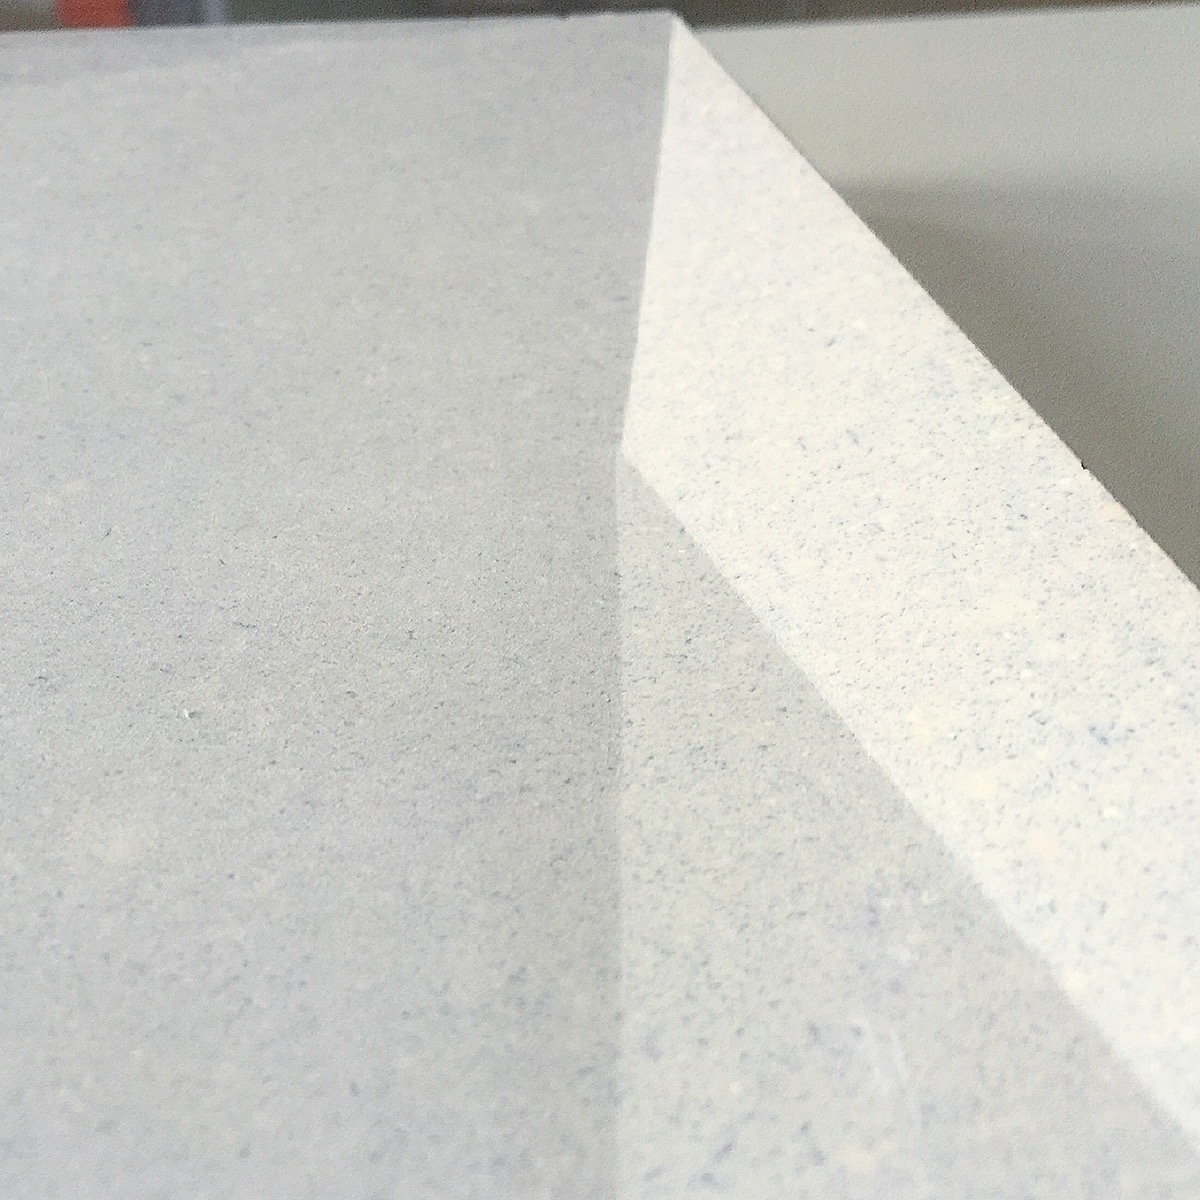 concrete handmade surface tile design interiordesign flooring ashlar